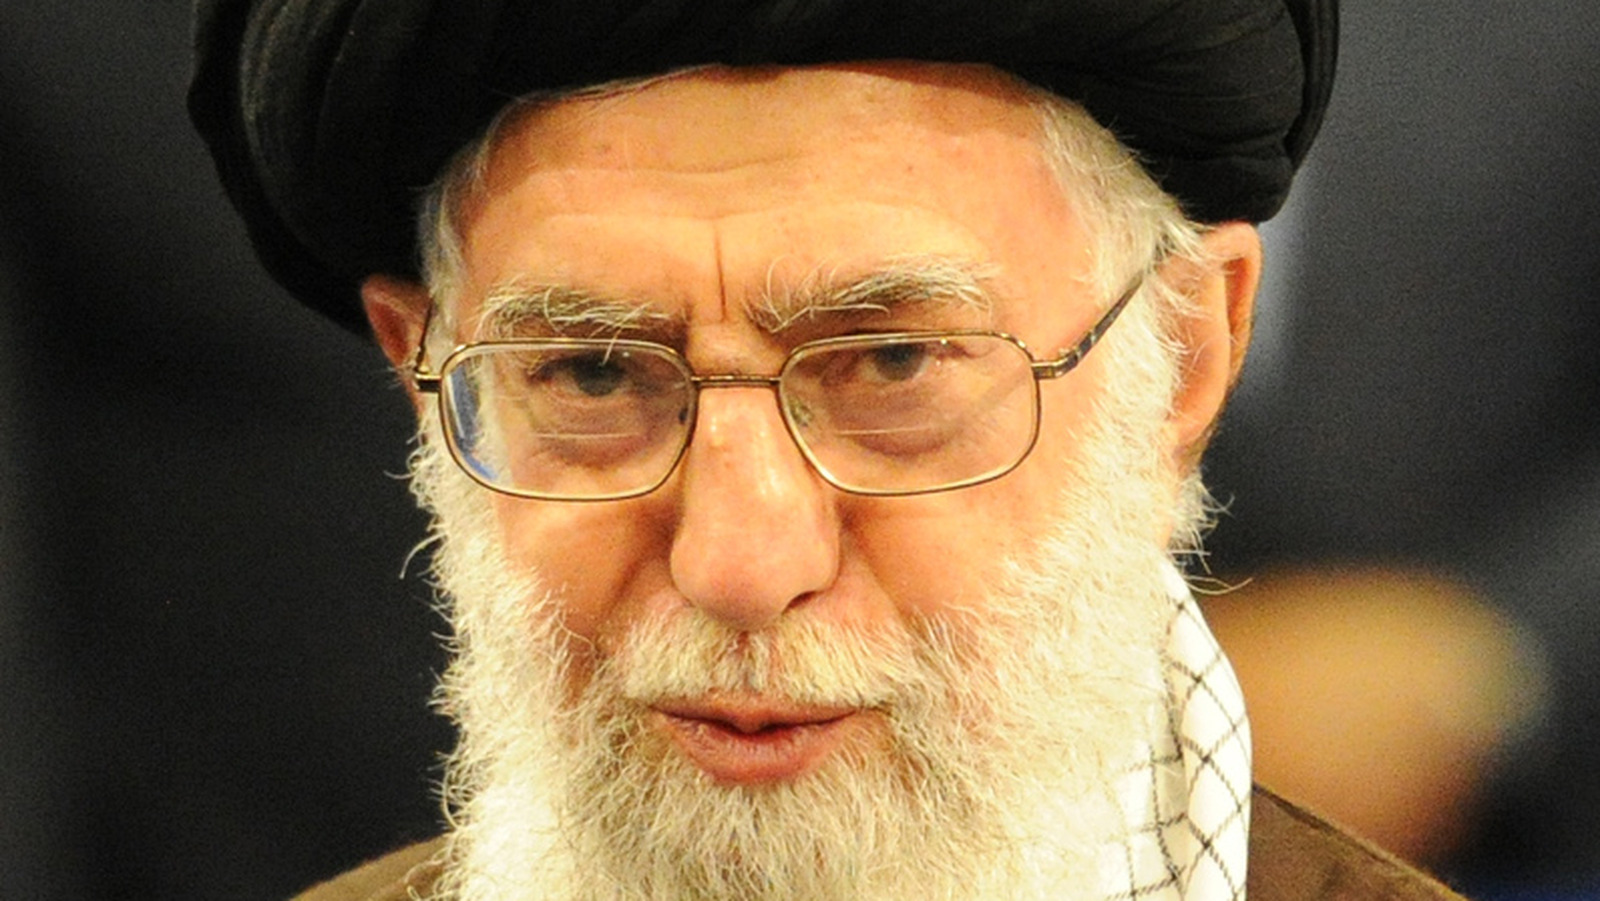 Facts about Iran Supreme Leader Ali Khamenei